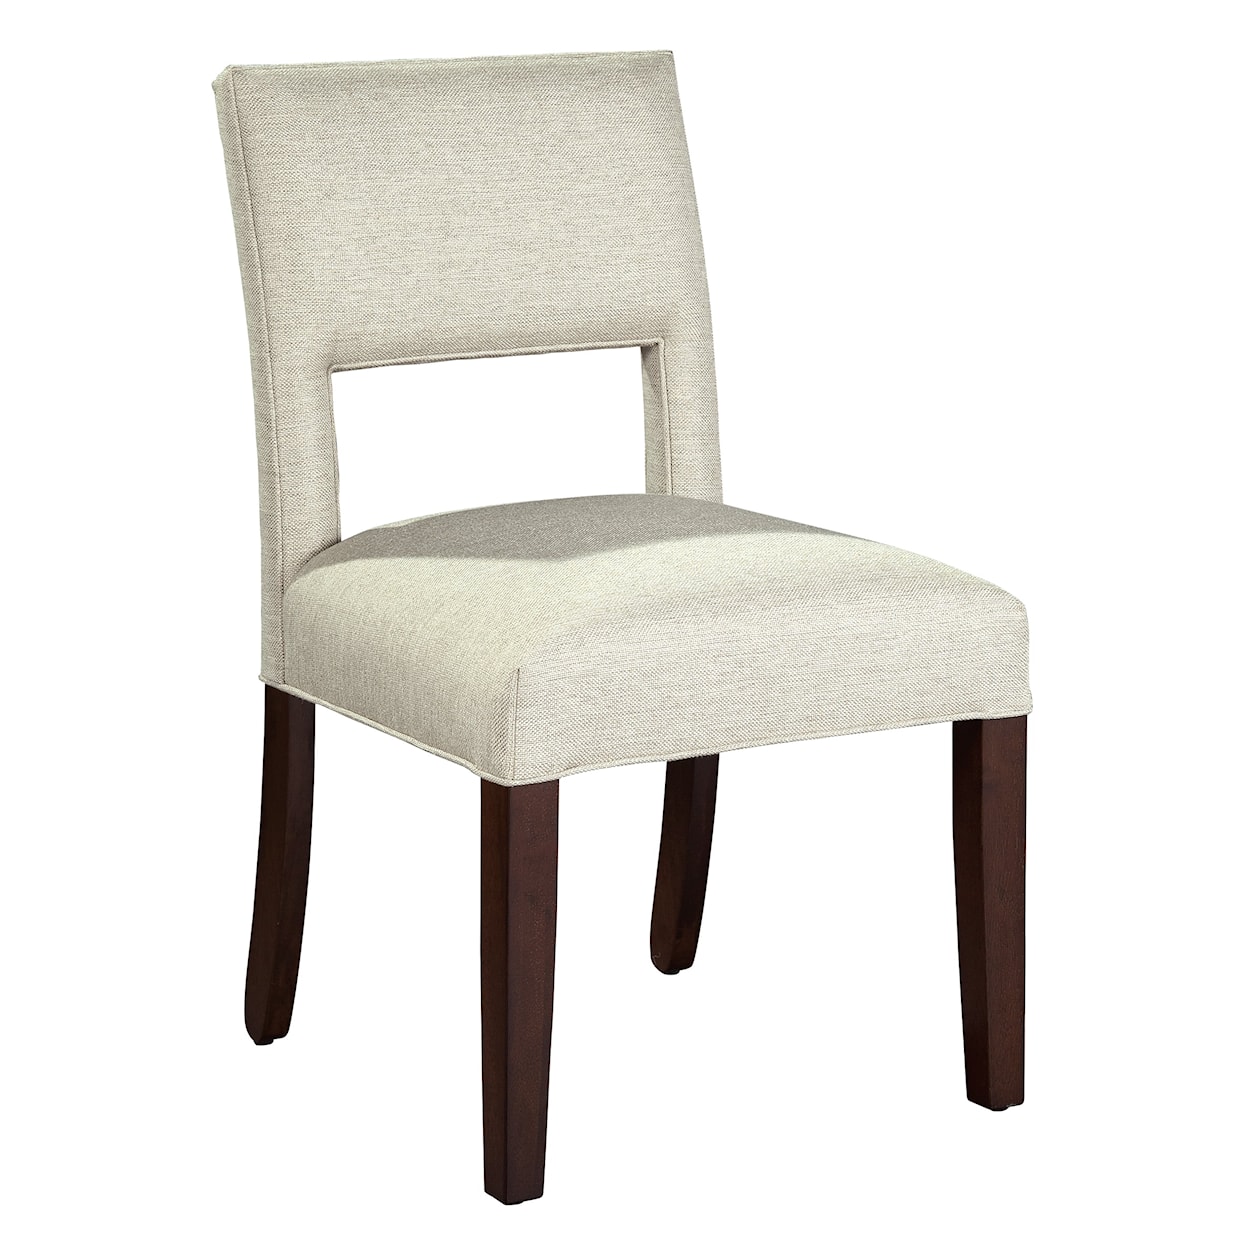 Hekman Upholstery Maddox Dining Chair